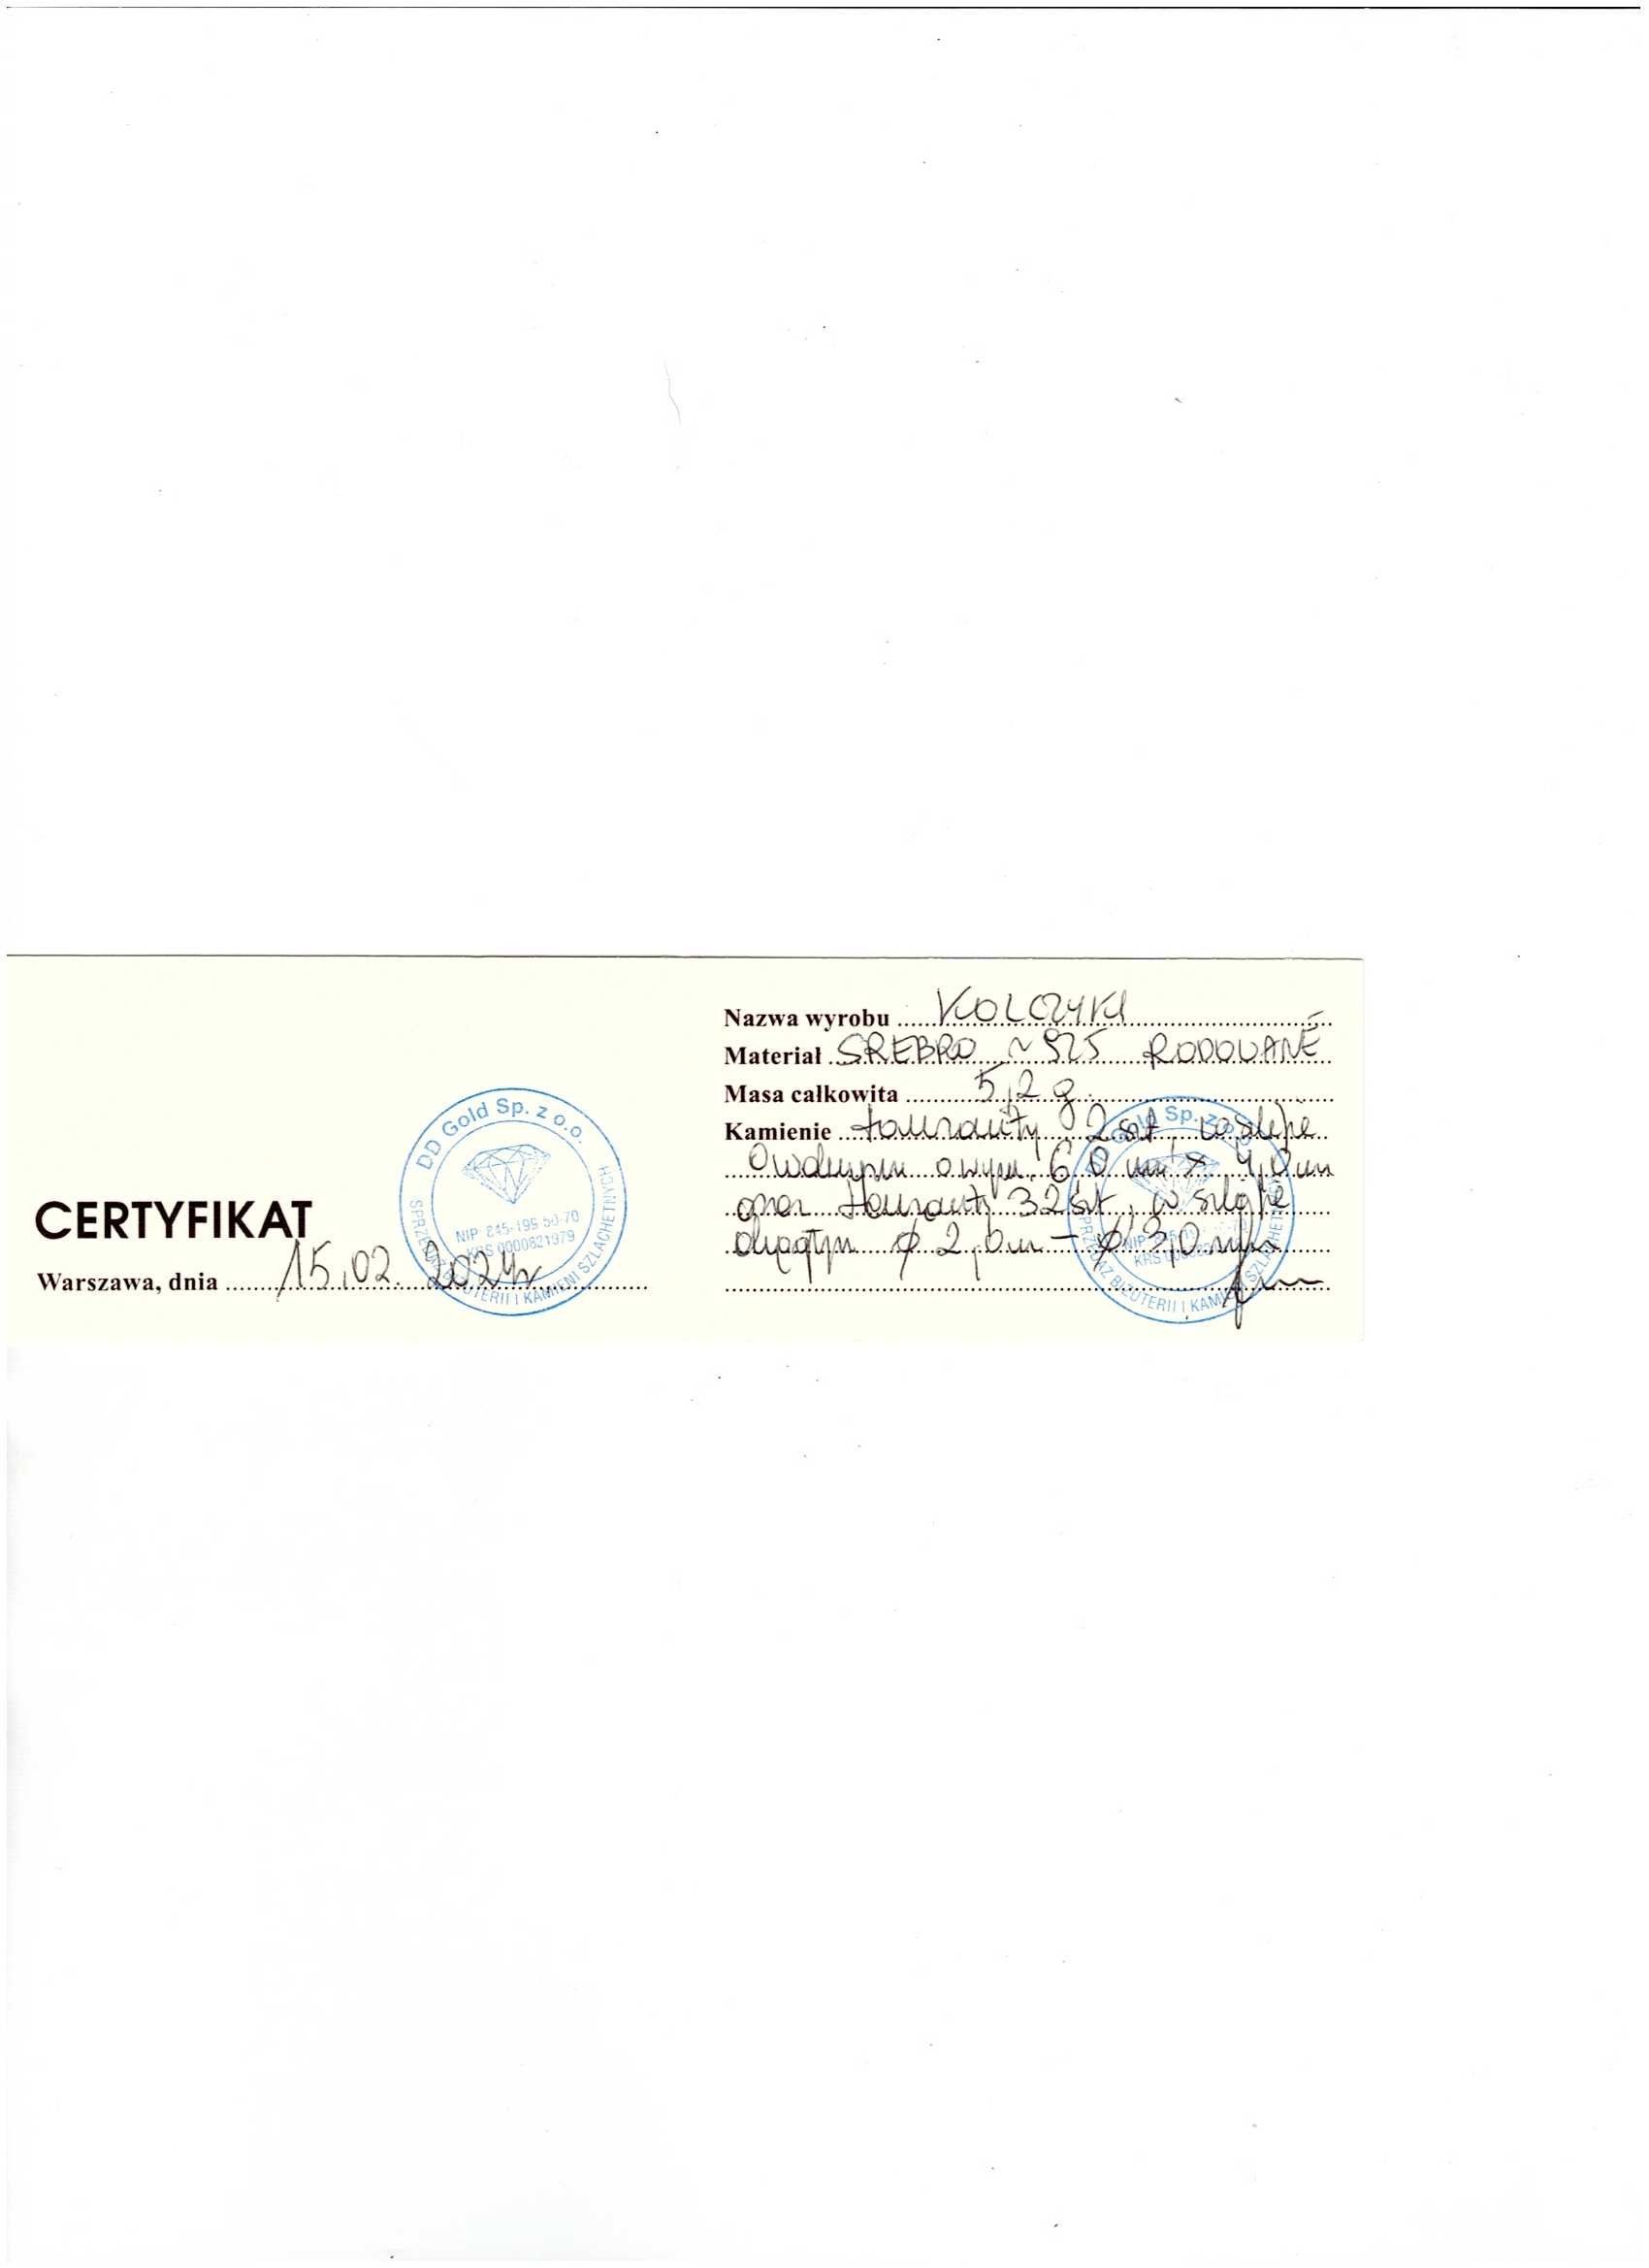 kolczyki srebro 925 tanzanity 5,2 g certyfikat